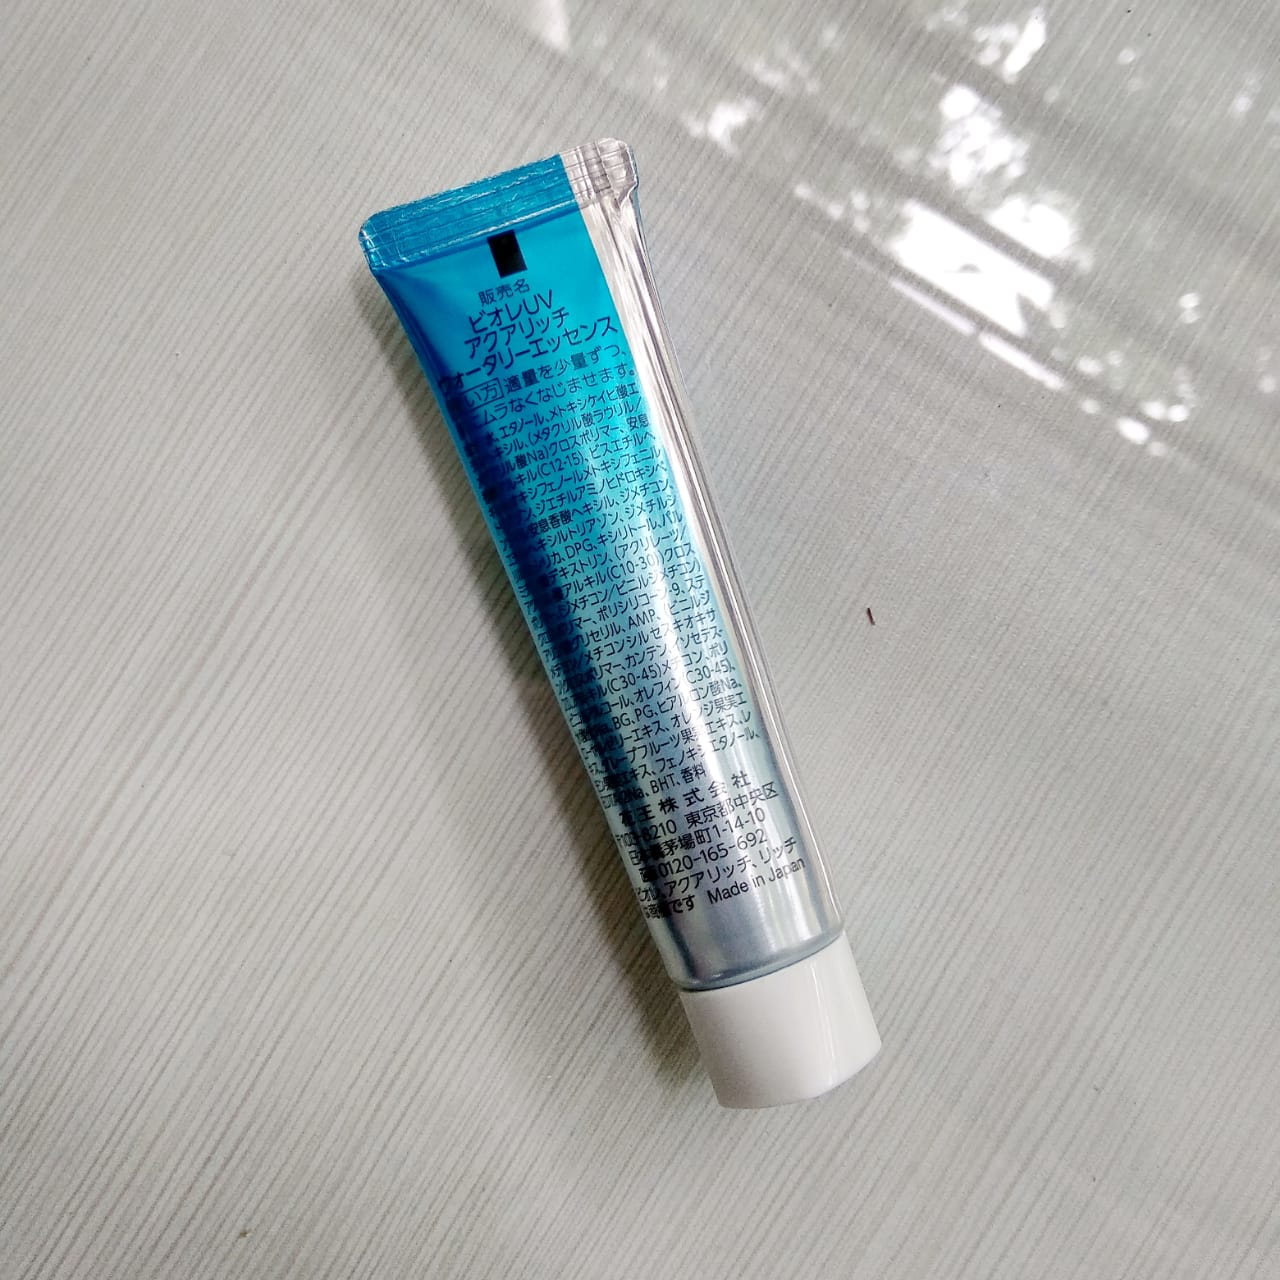 Biore UV Aqua Rich rekomendasi sunscreen nomor 1 di Jepang